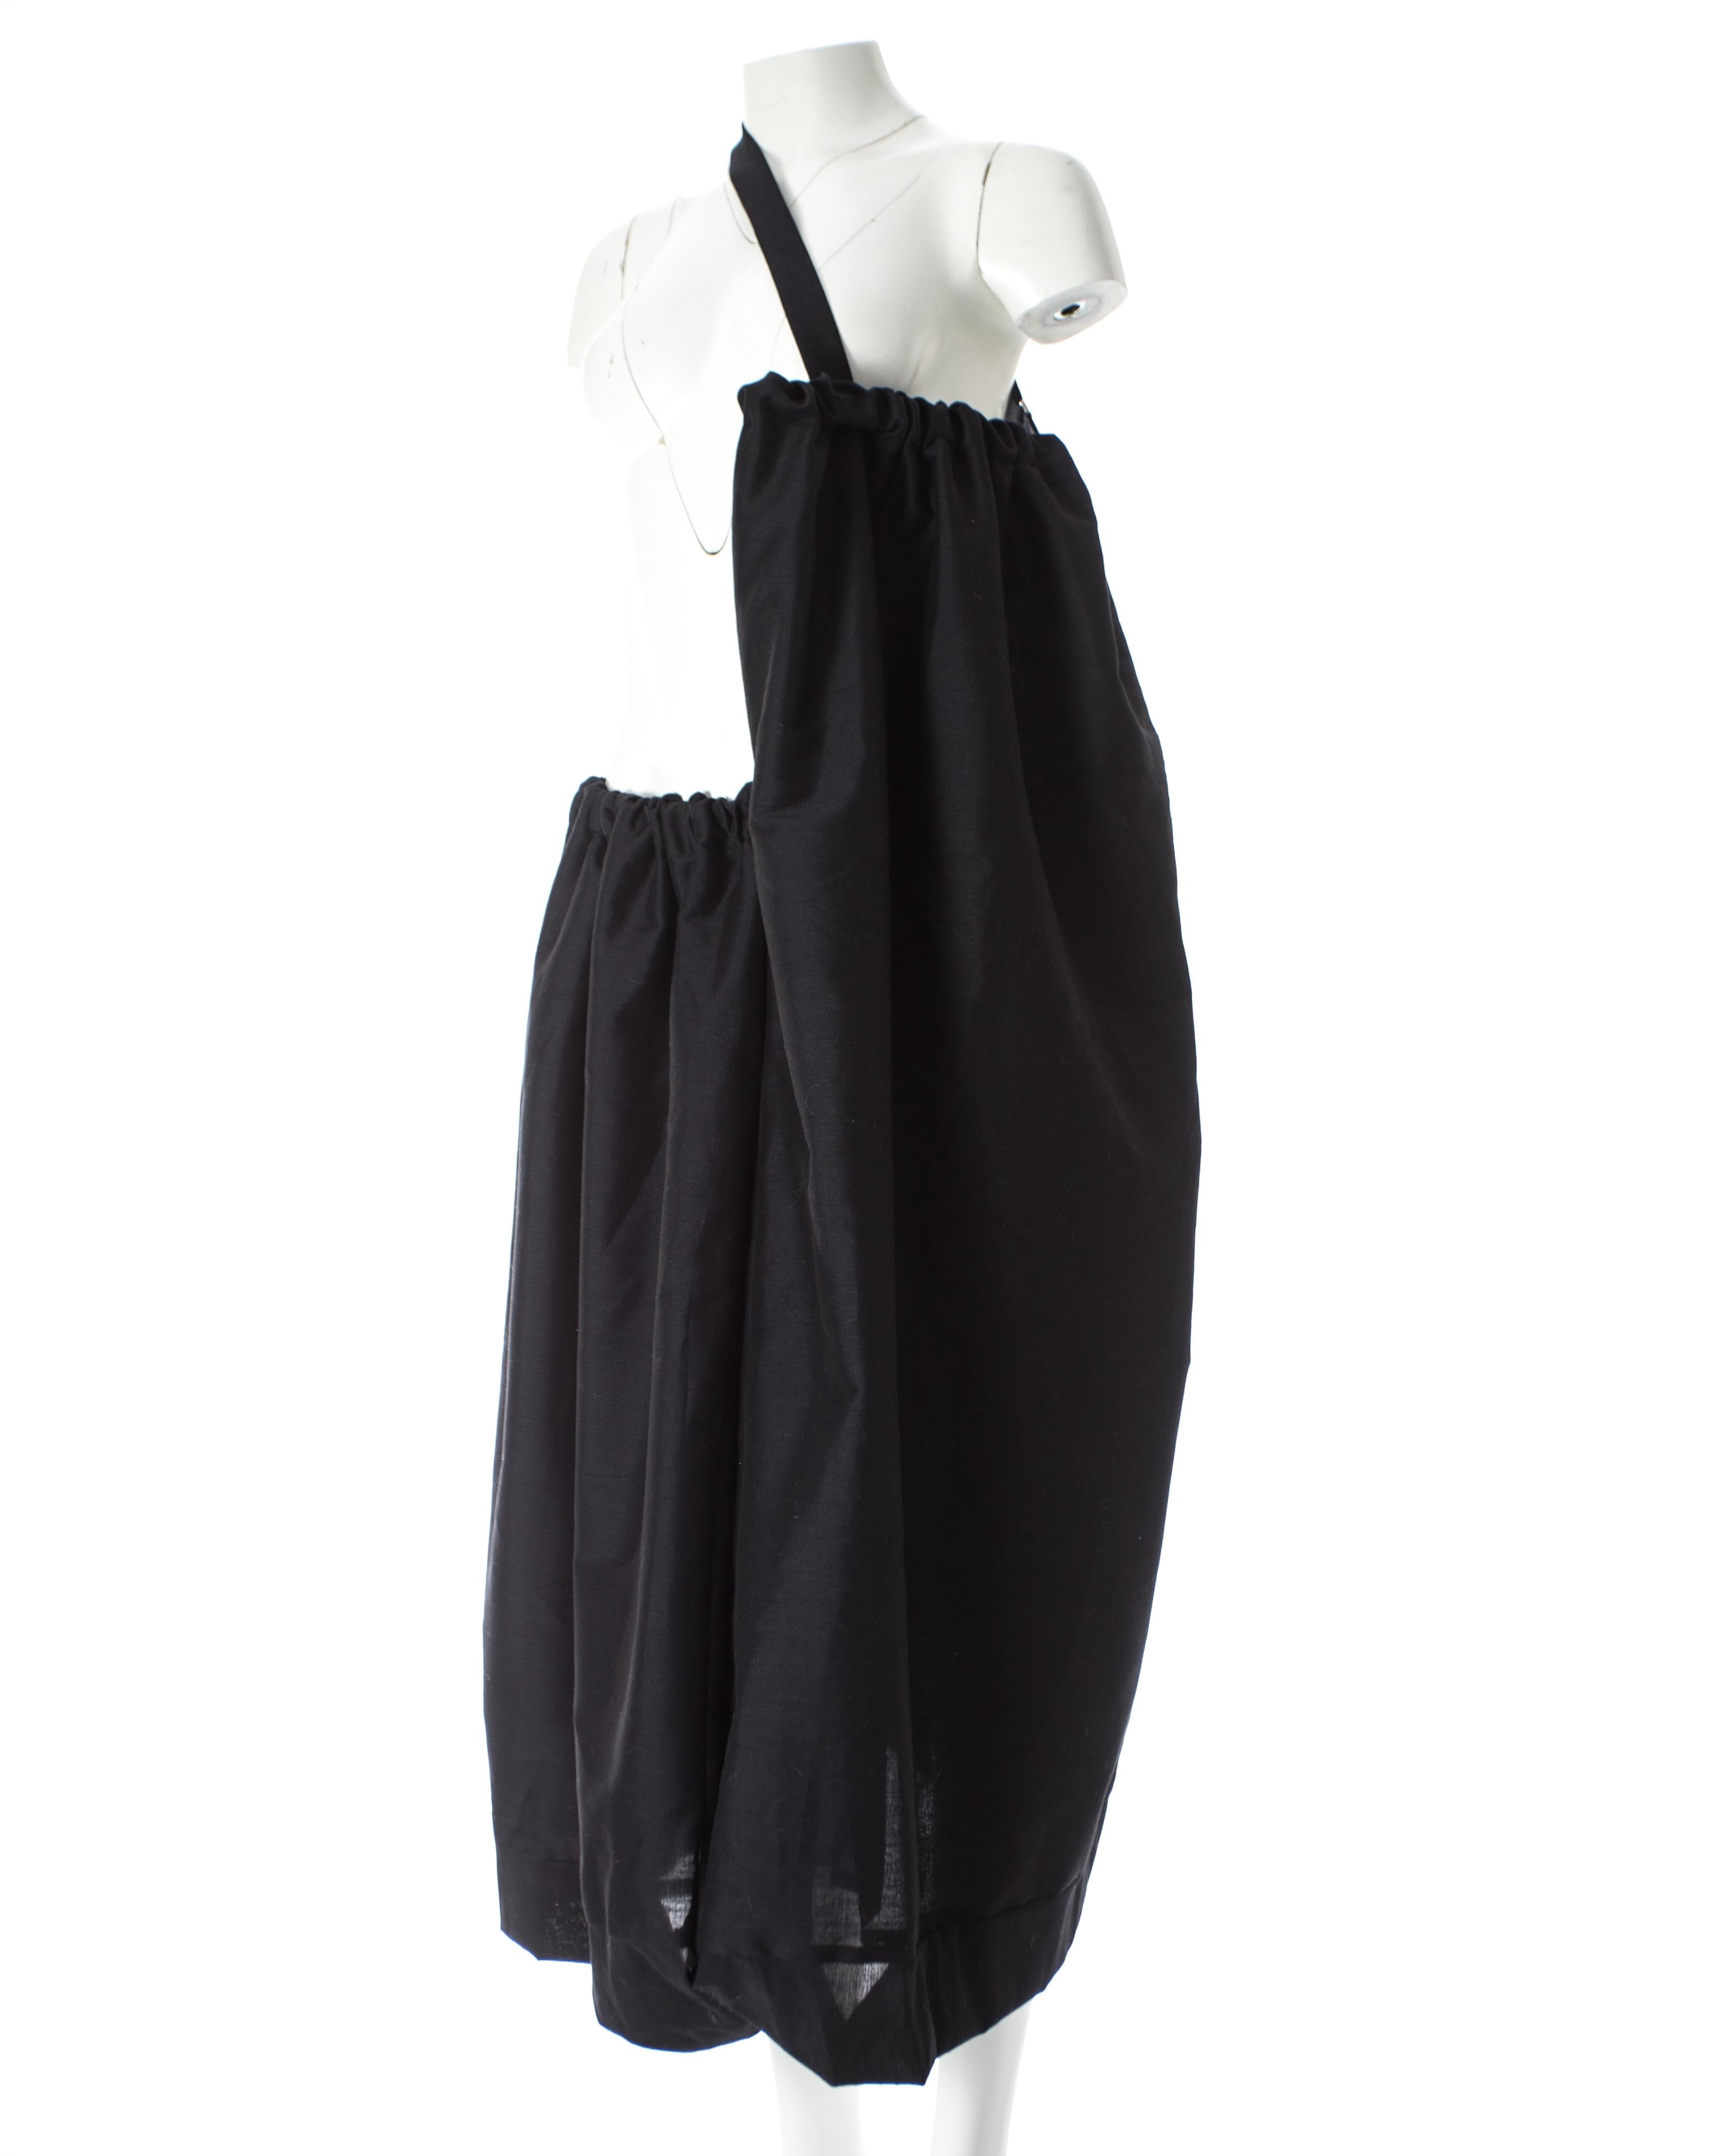 Women's Yohji Yamamoto black convertible dress / skirt / bag combination, S / S 2001